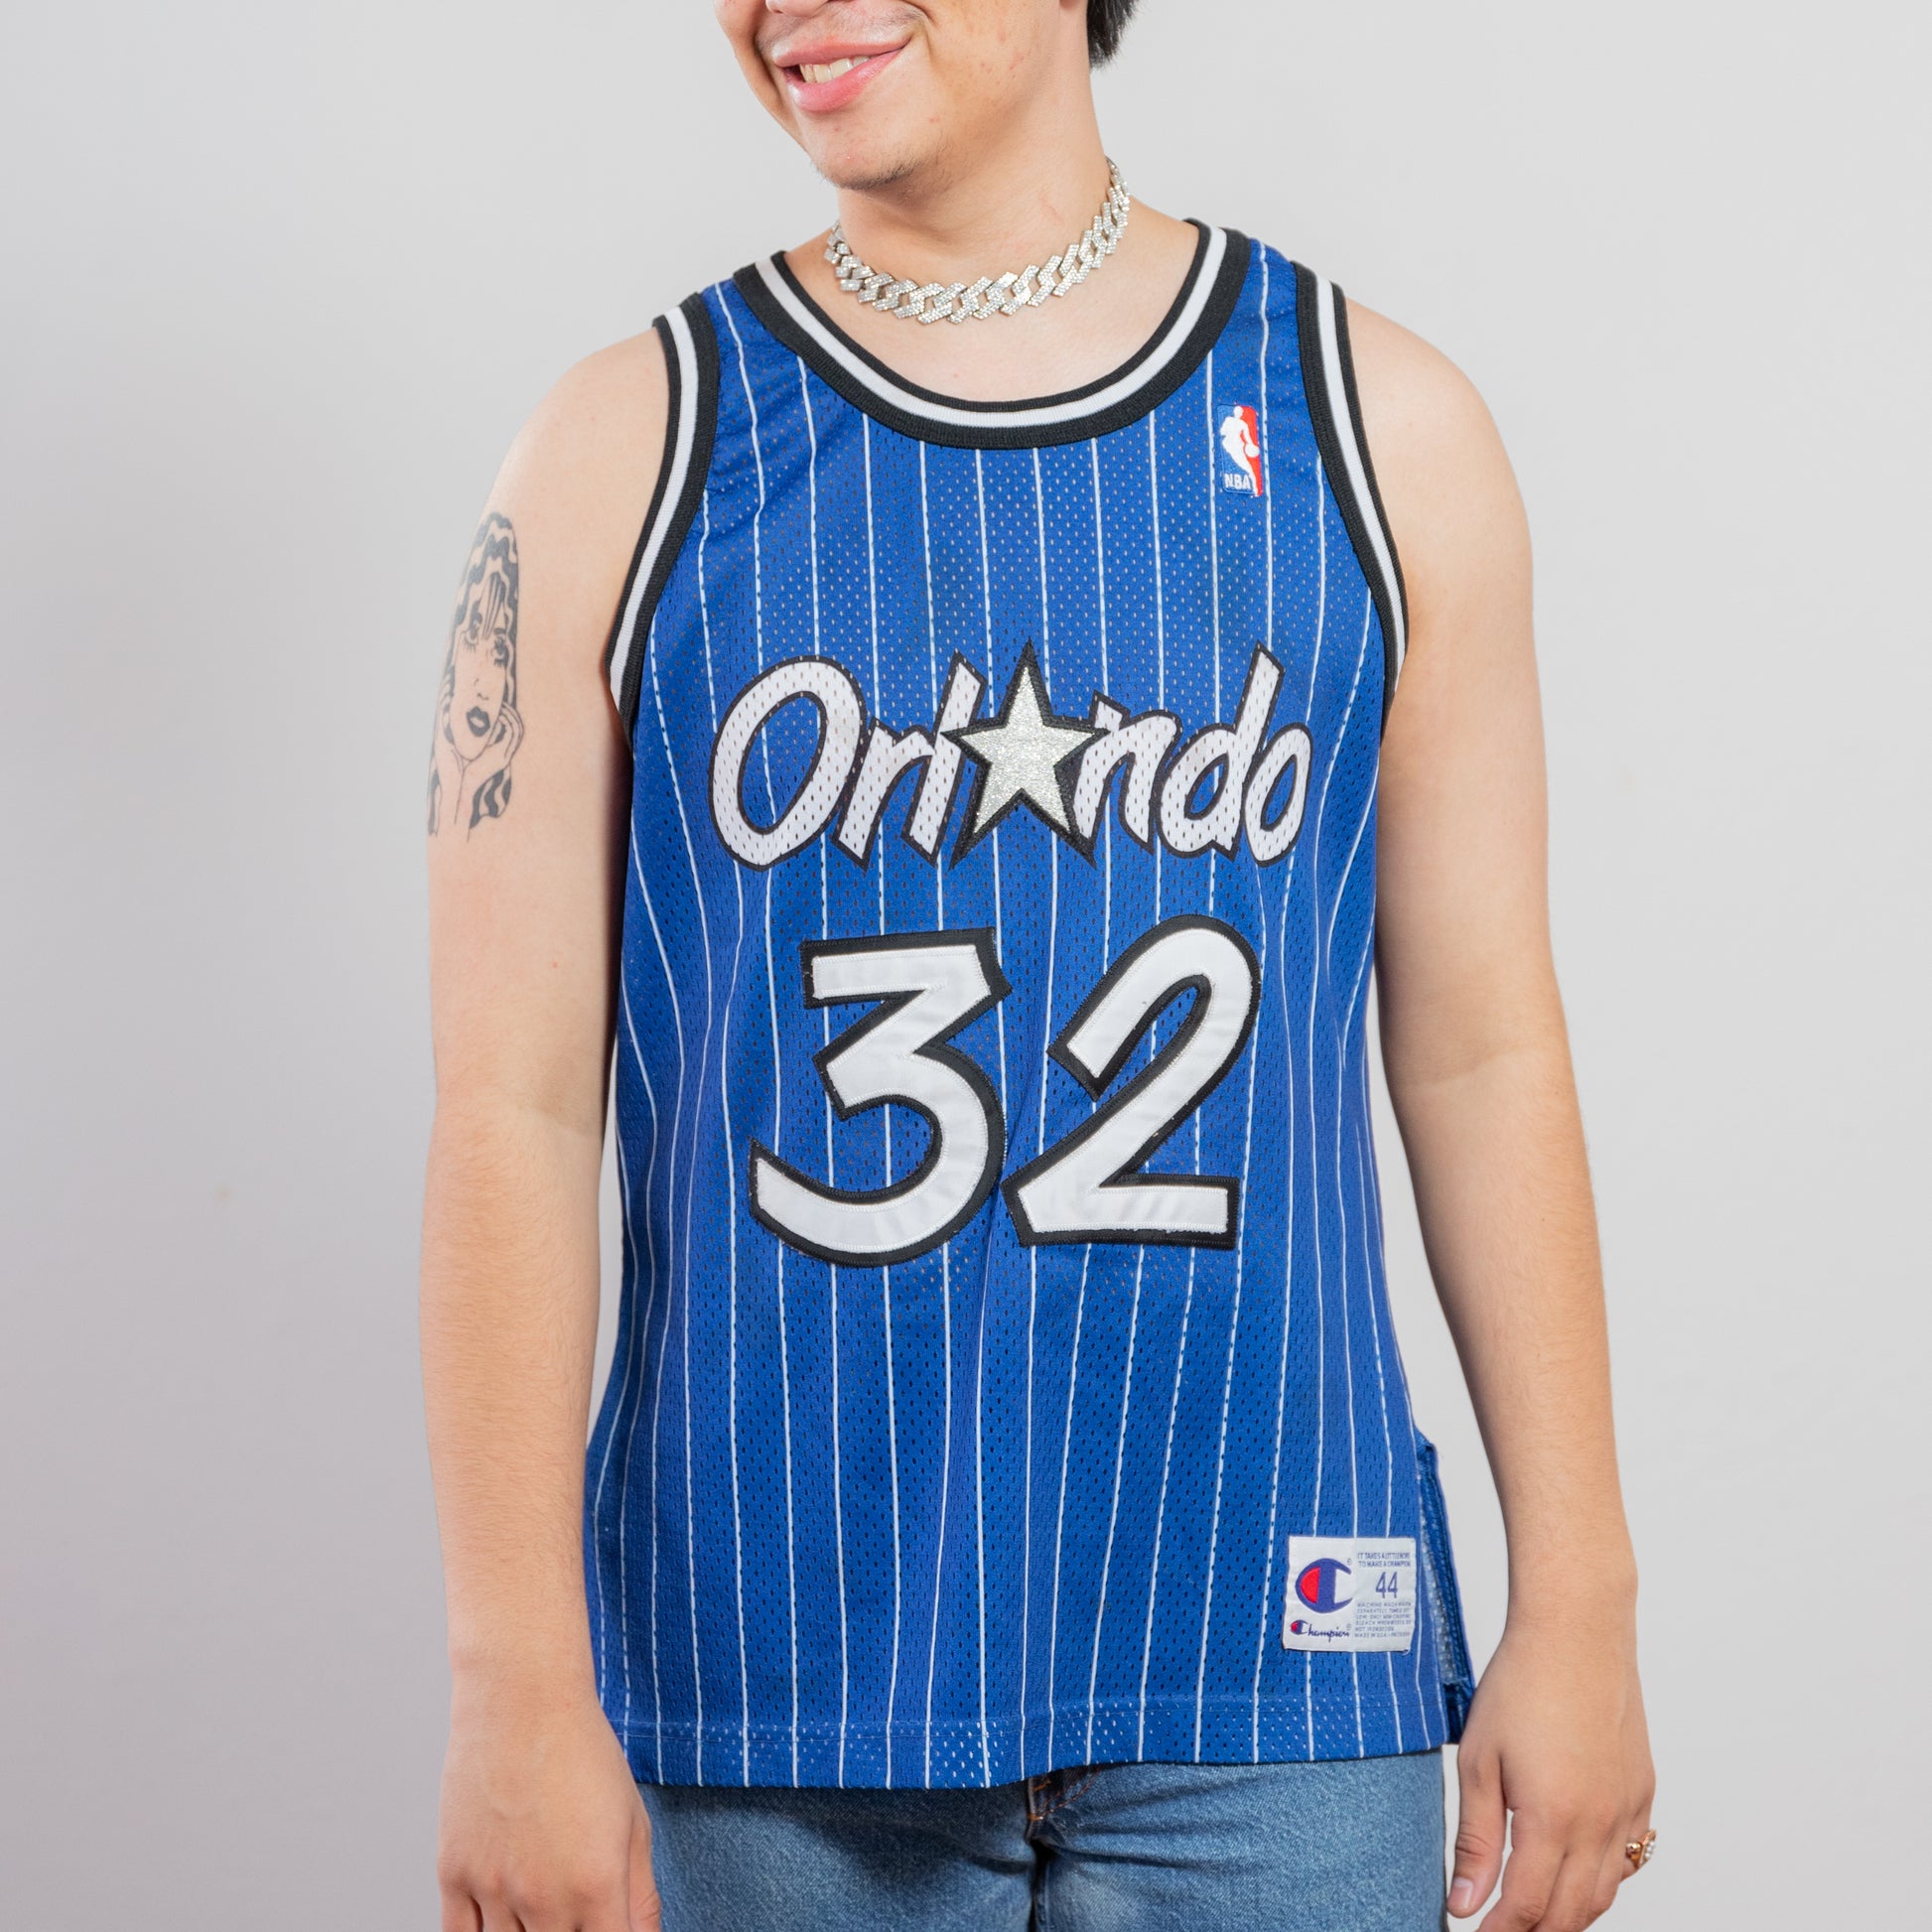 Shaquille O'Neal Jersey - NBA Orlando Magic Shaquille O'Neal